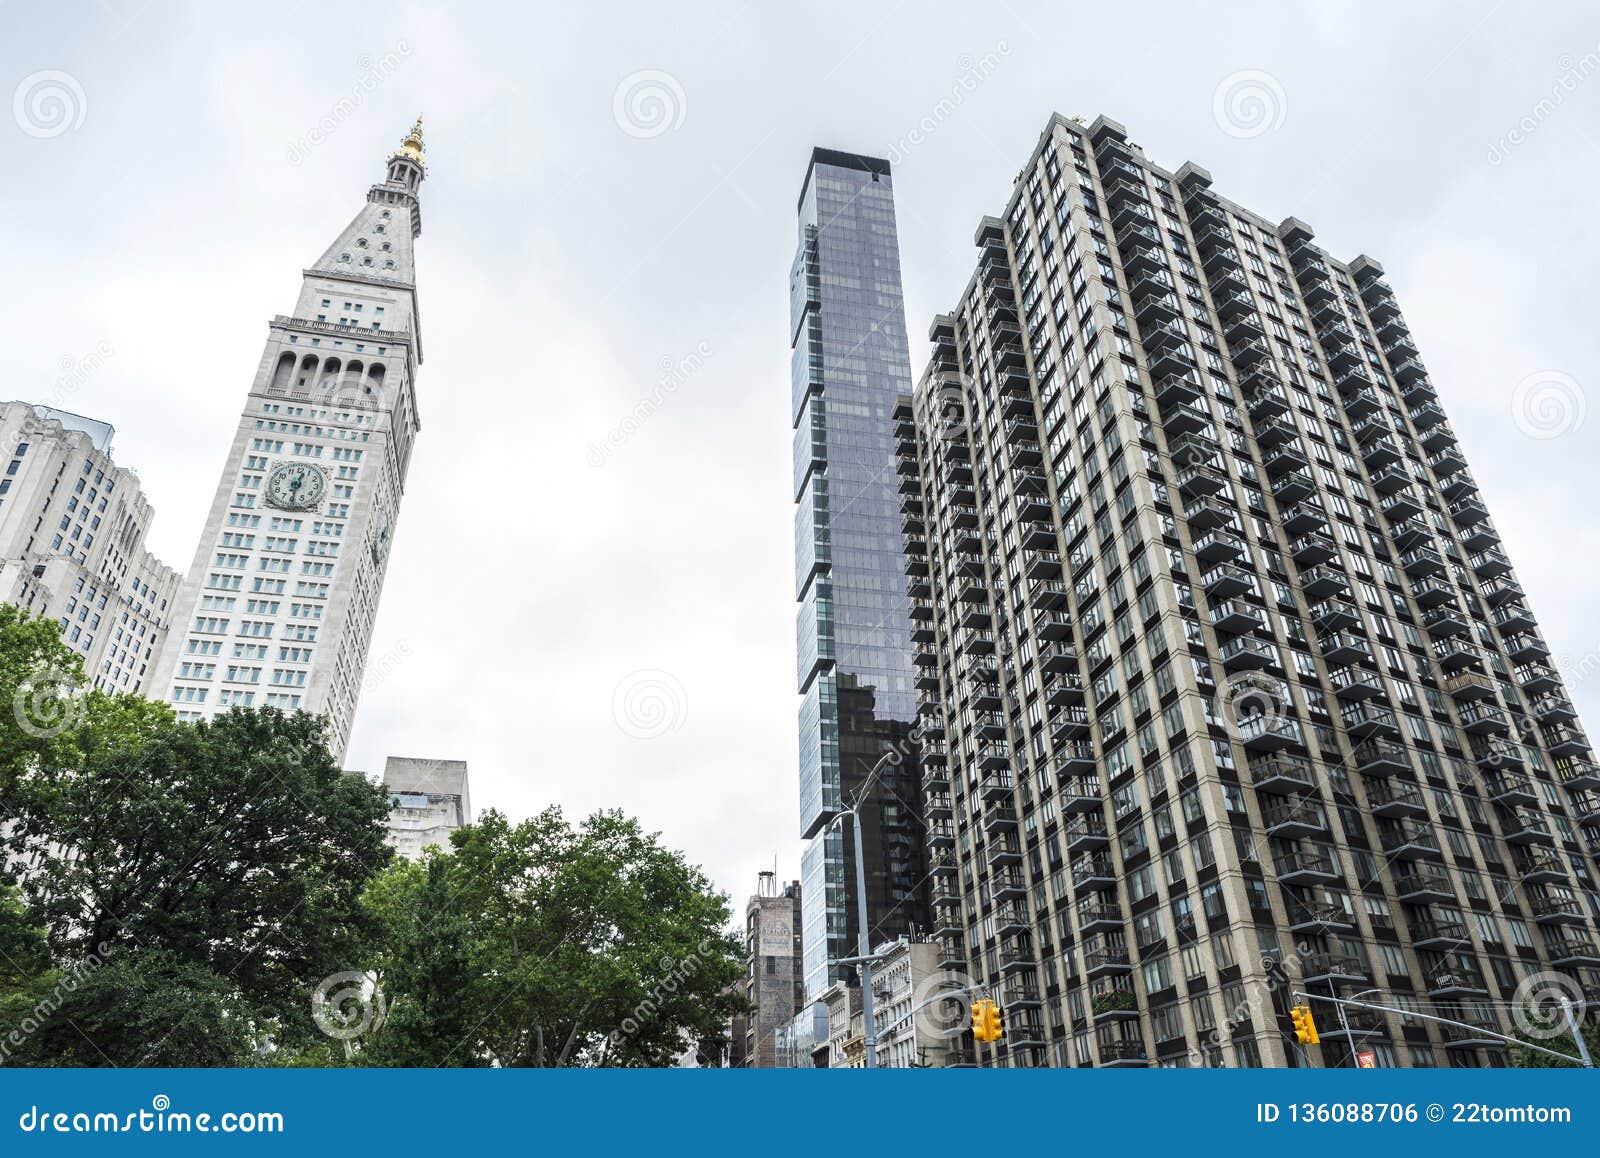 skyscrapers in manhattan in new york city, usa